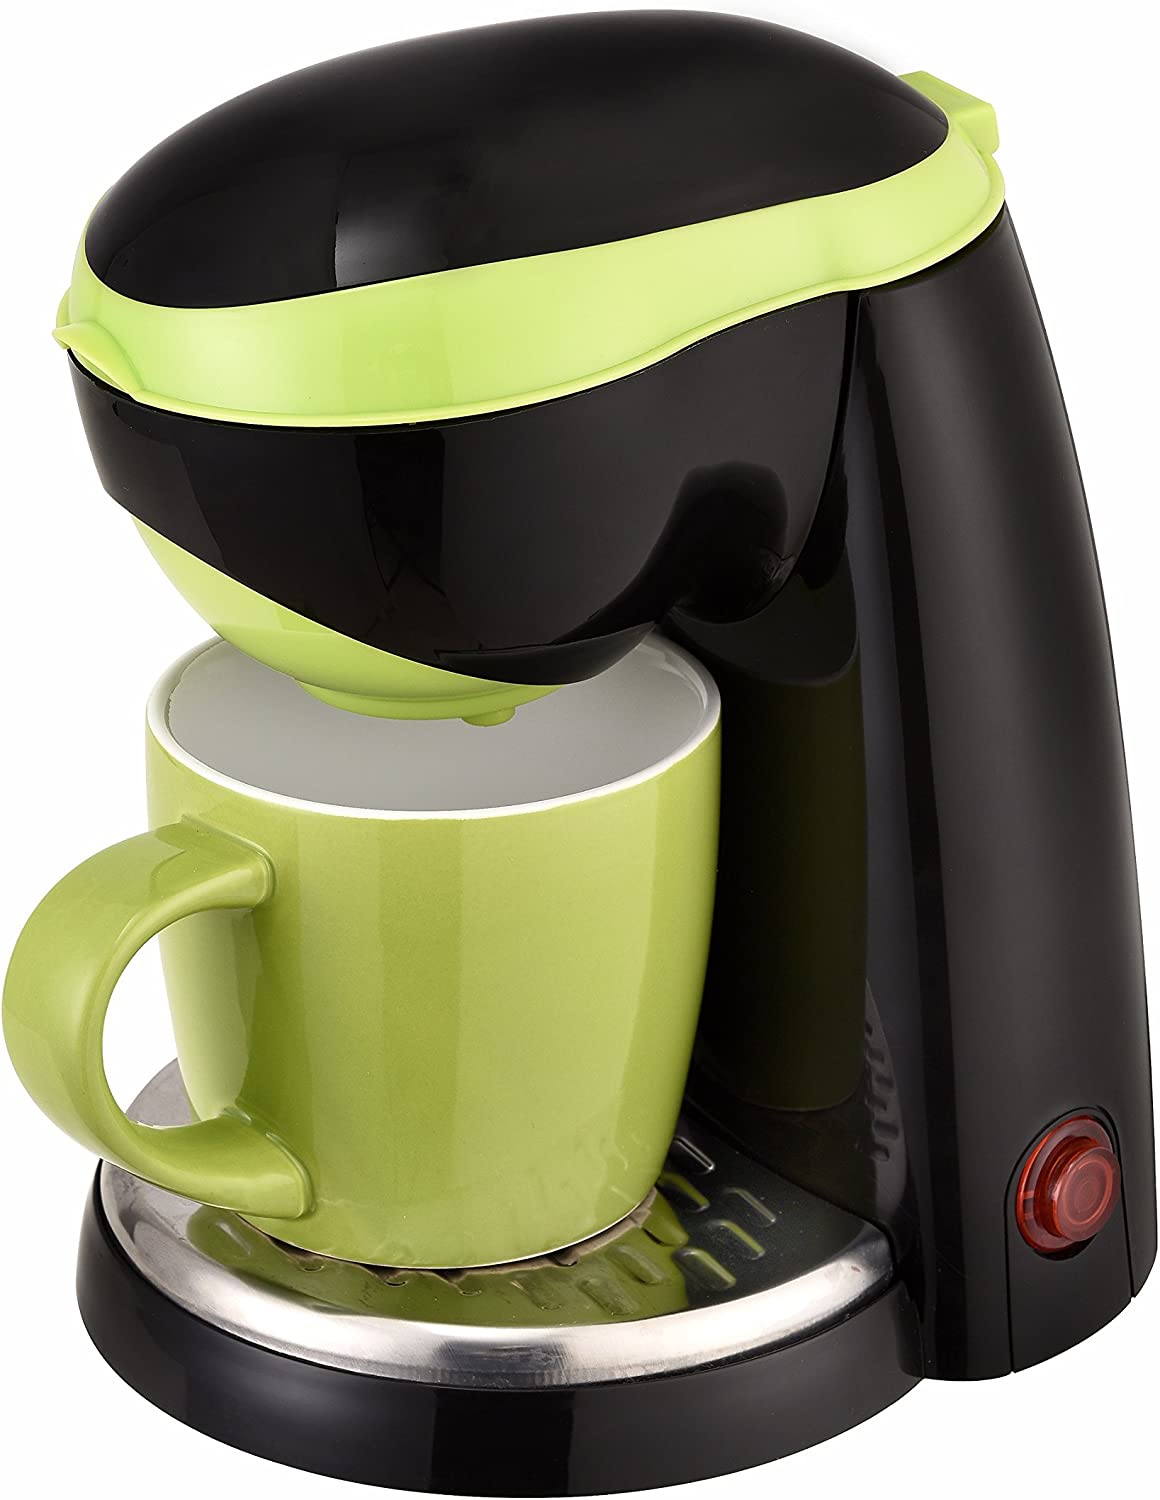 Team-Kalorik TKGCM1015BG Group 1-Cup Coffee Machine, Black/green